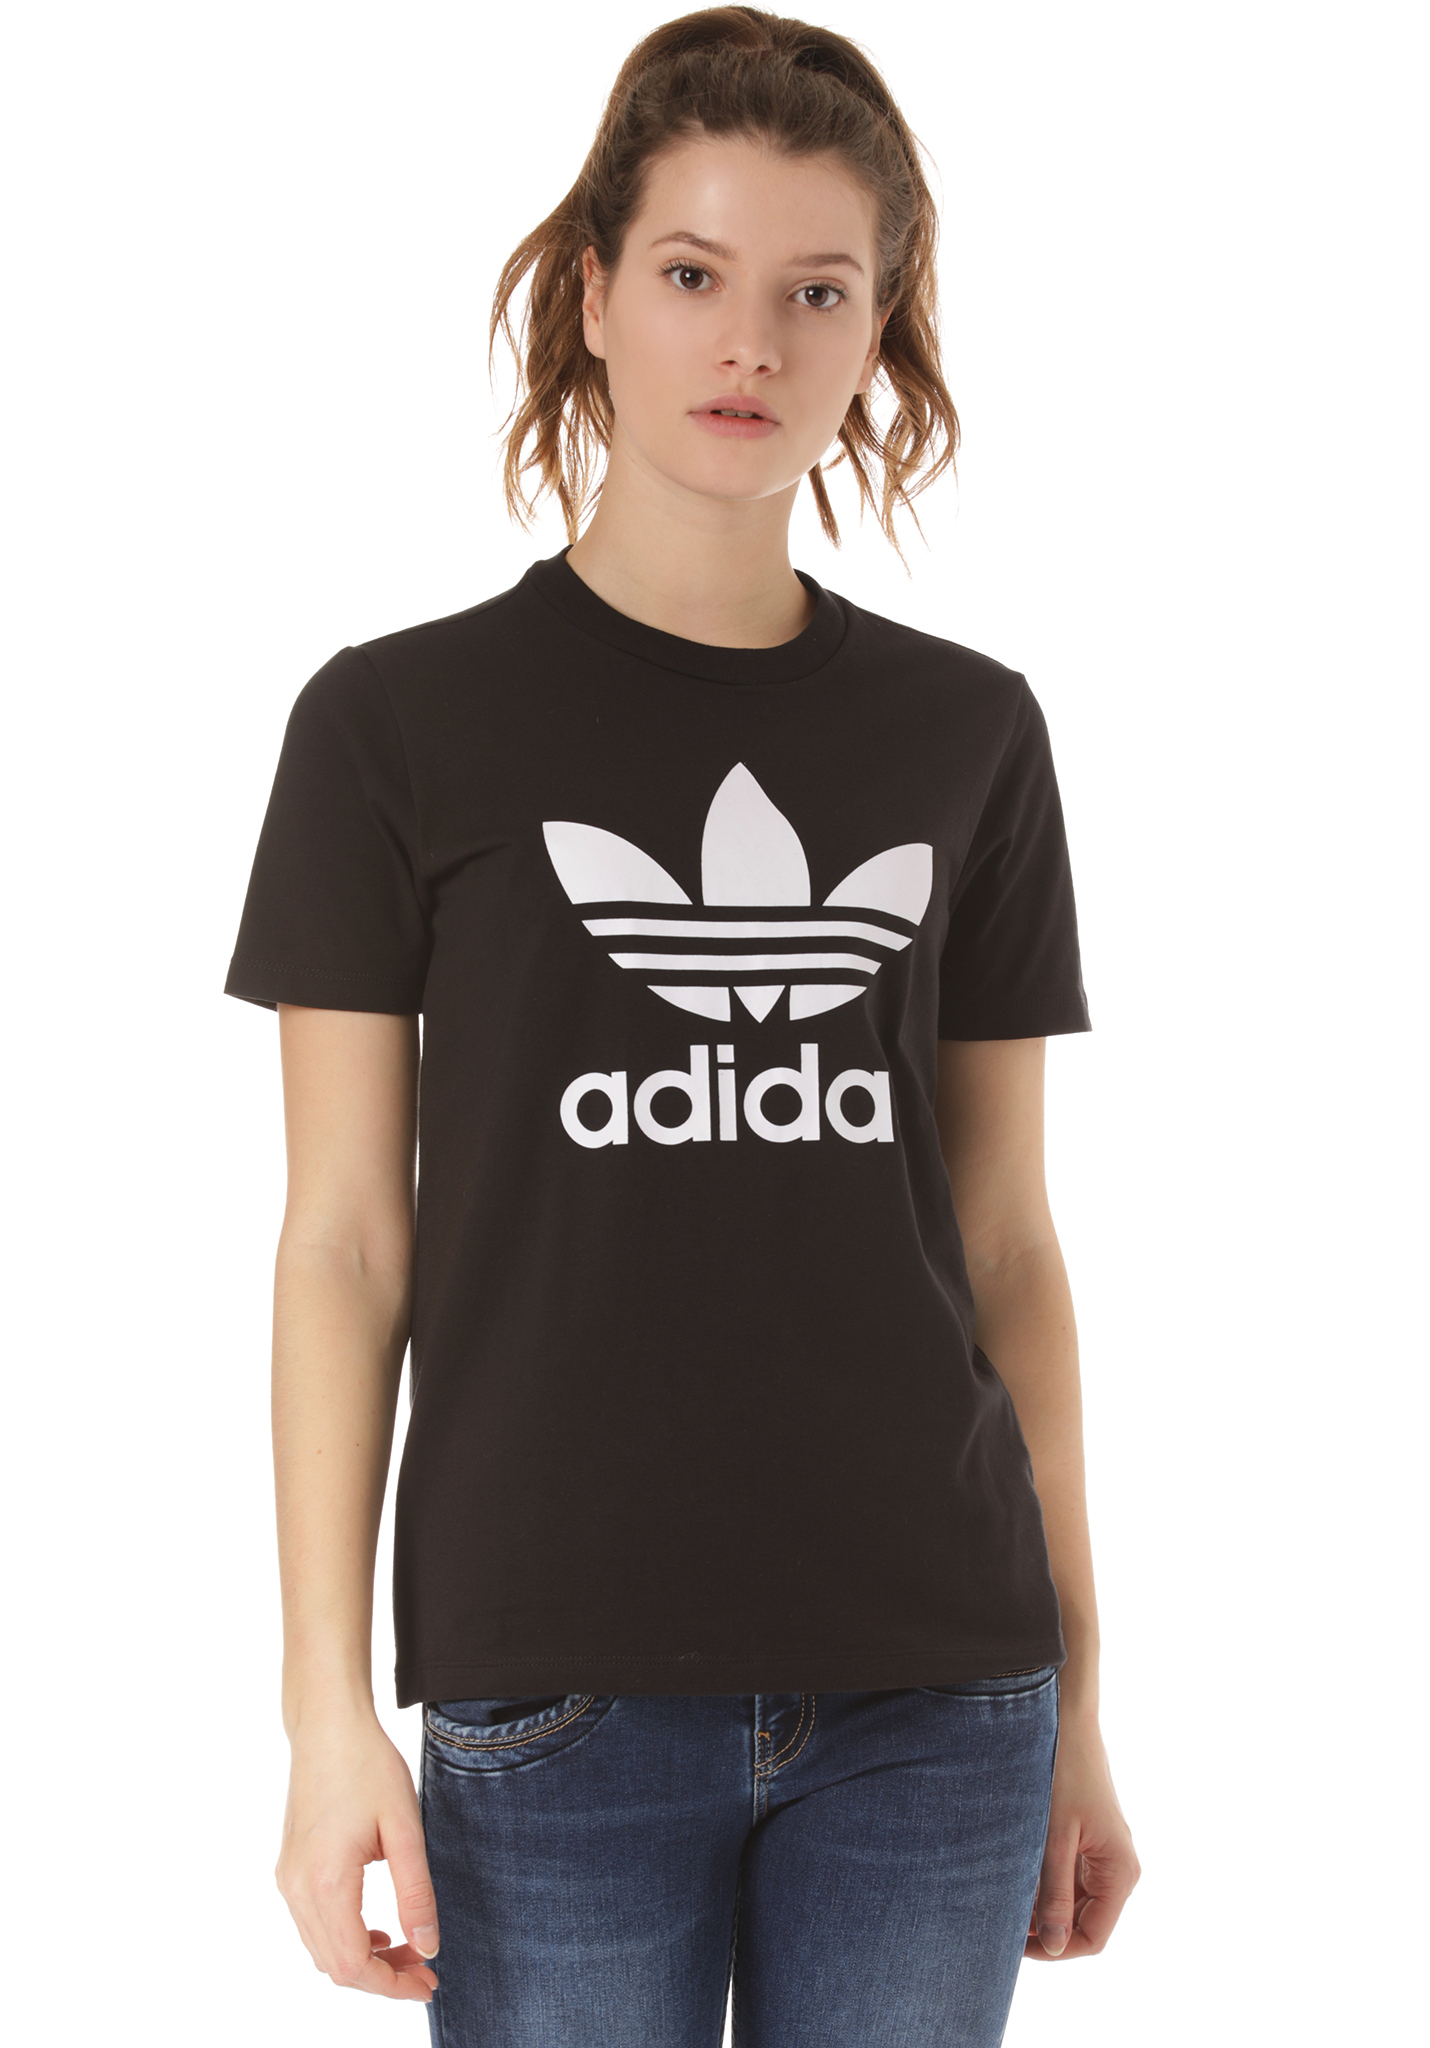 Adidas Originals Trefoil T-Shirt black-white 40